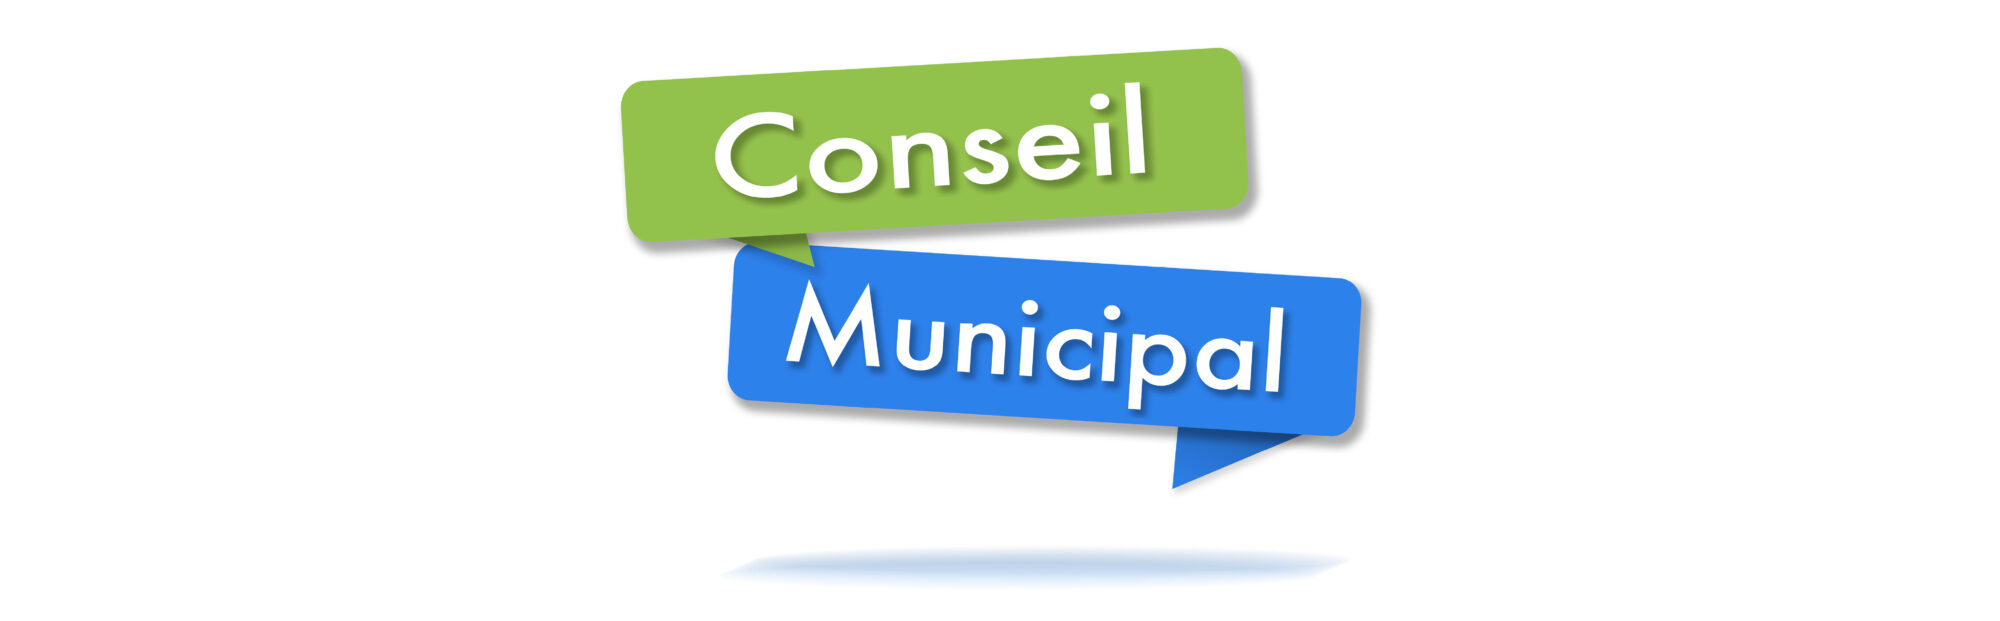 Conseil Municipal BANDEAU 1900X590